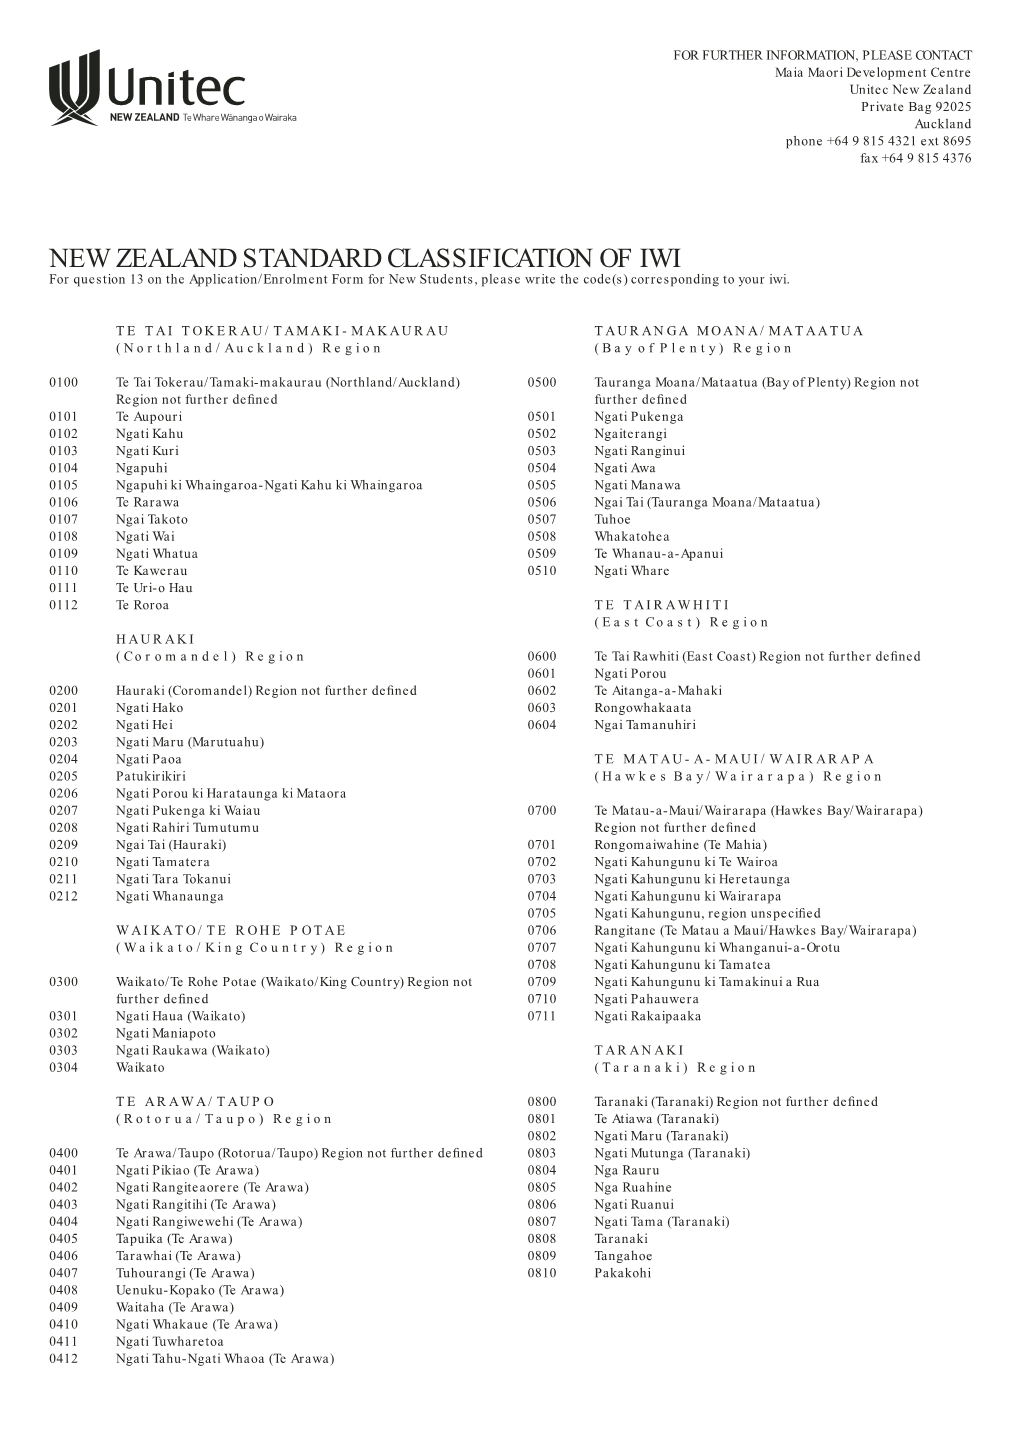 New Zealand Standard Classification of Iwi Document